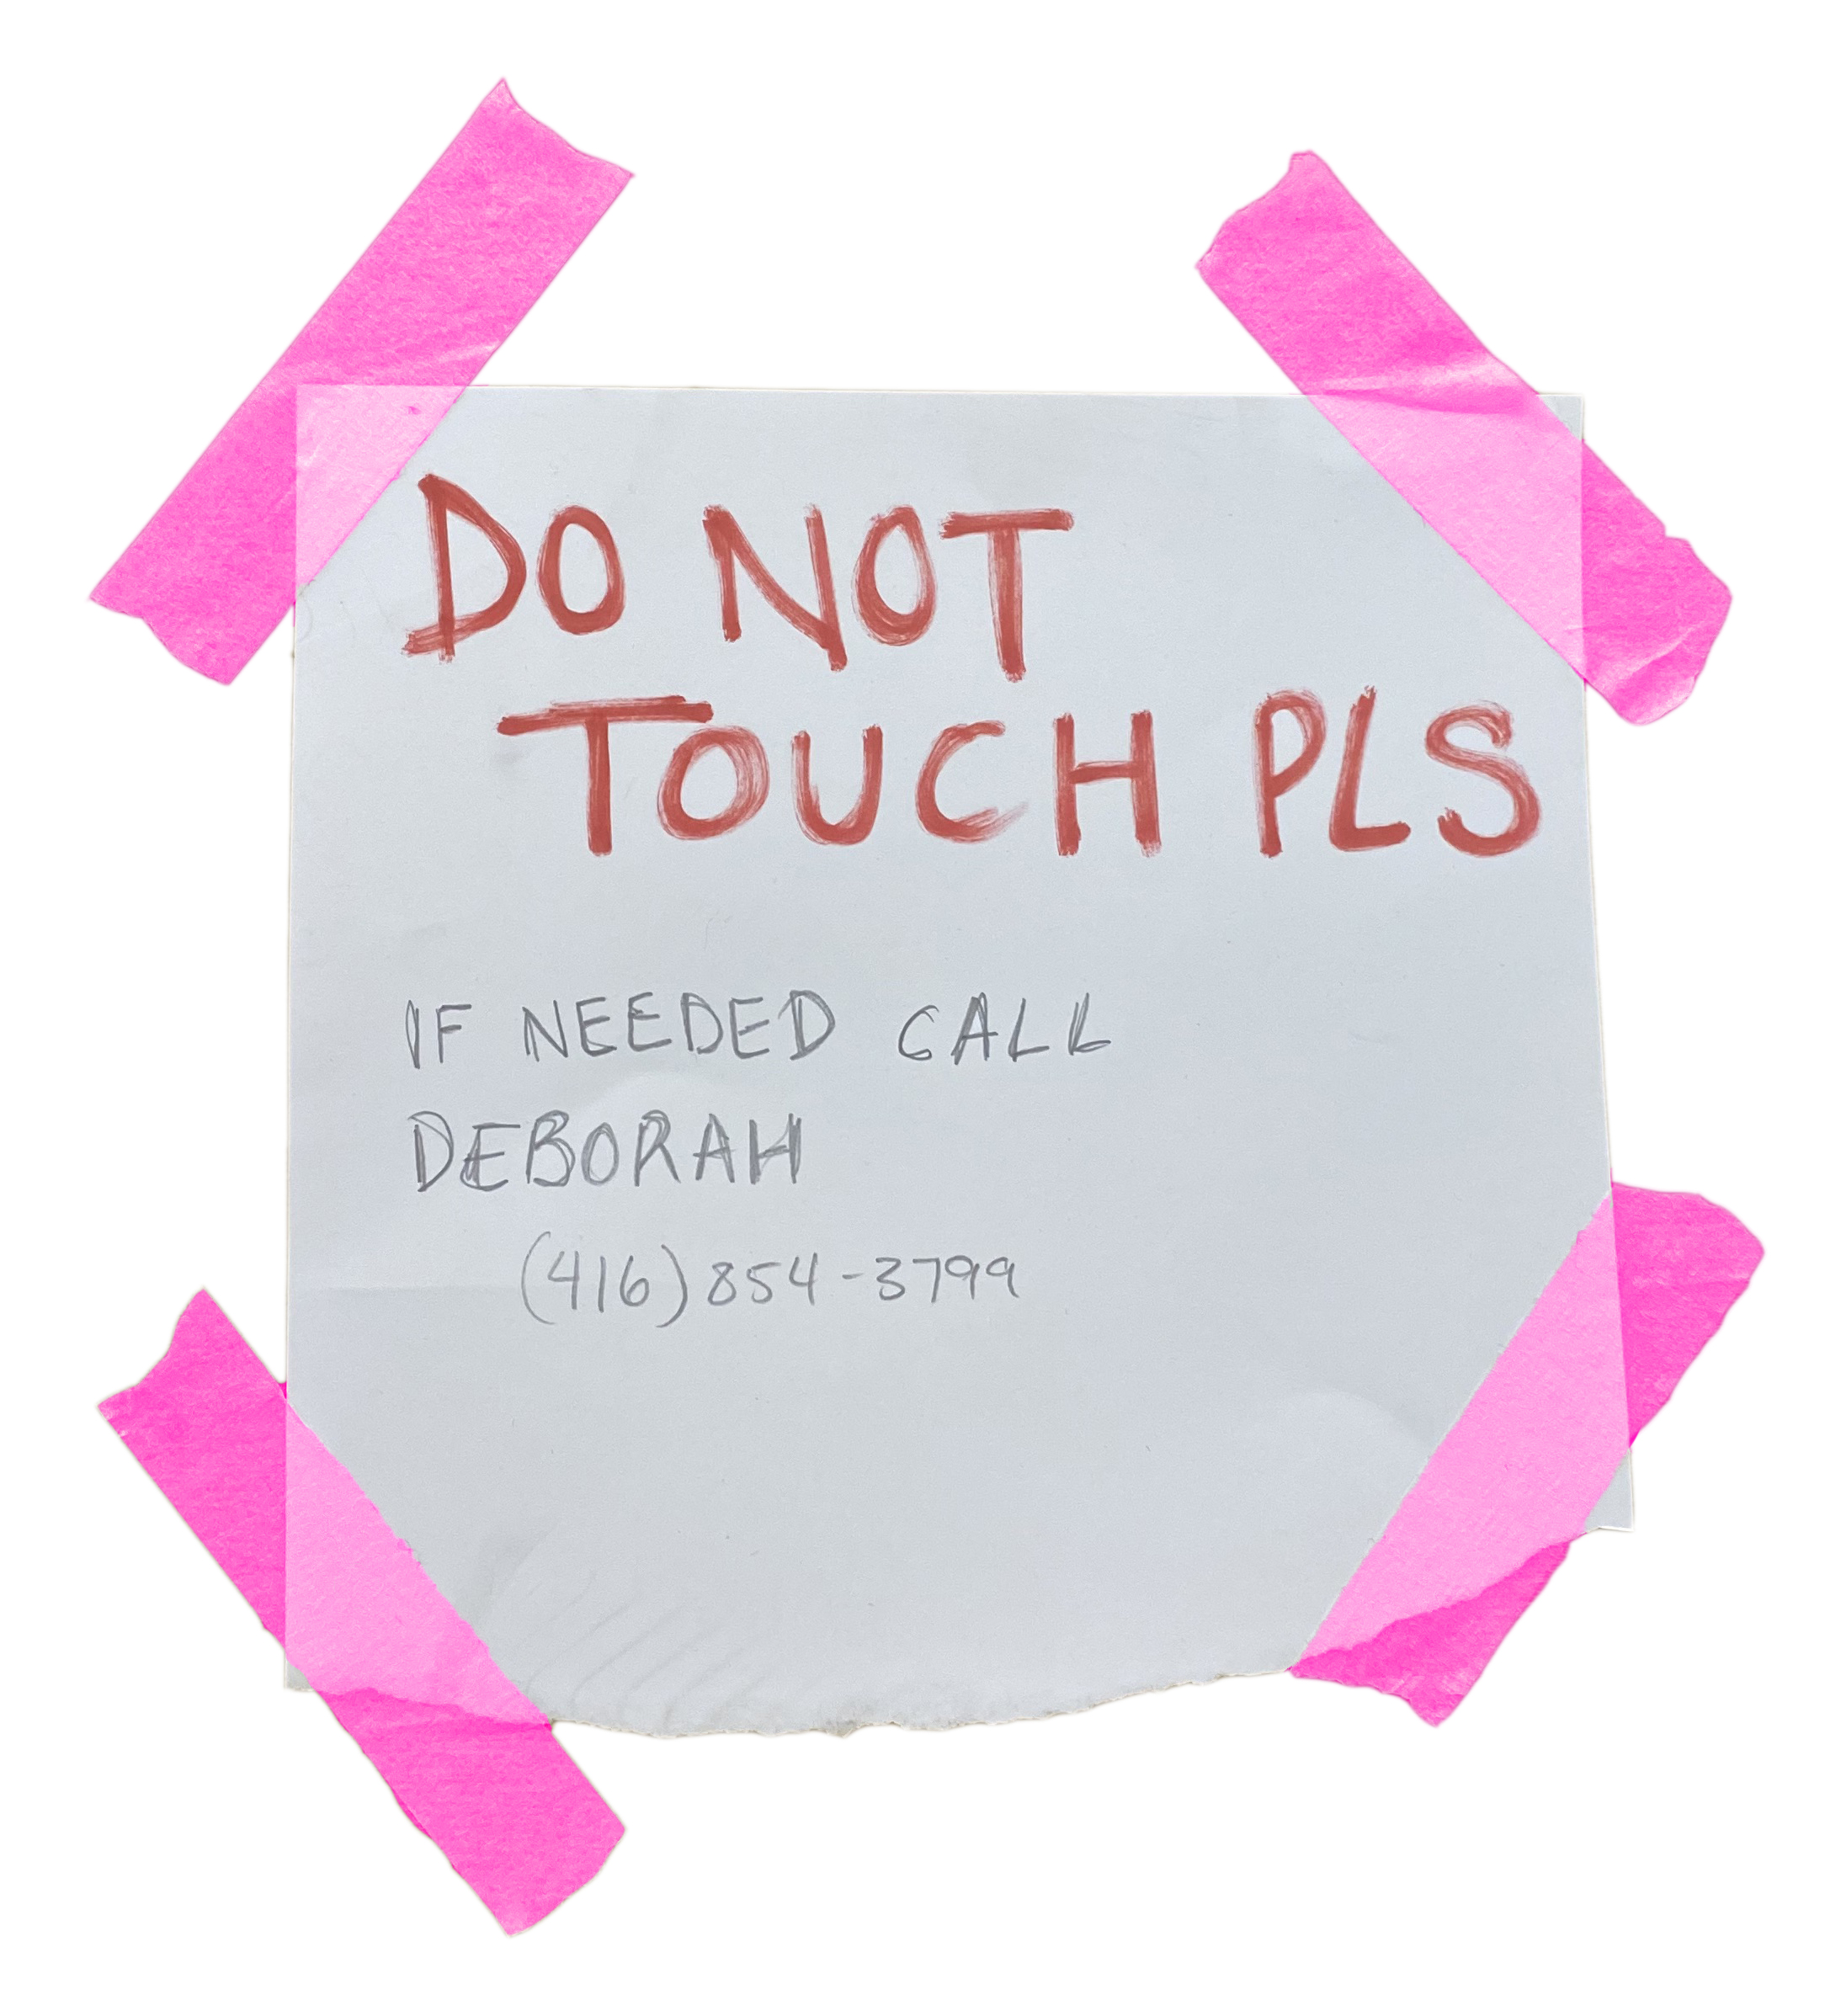 Do Not Touch Pls